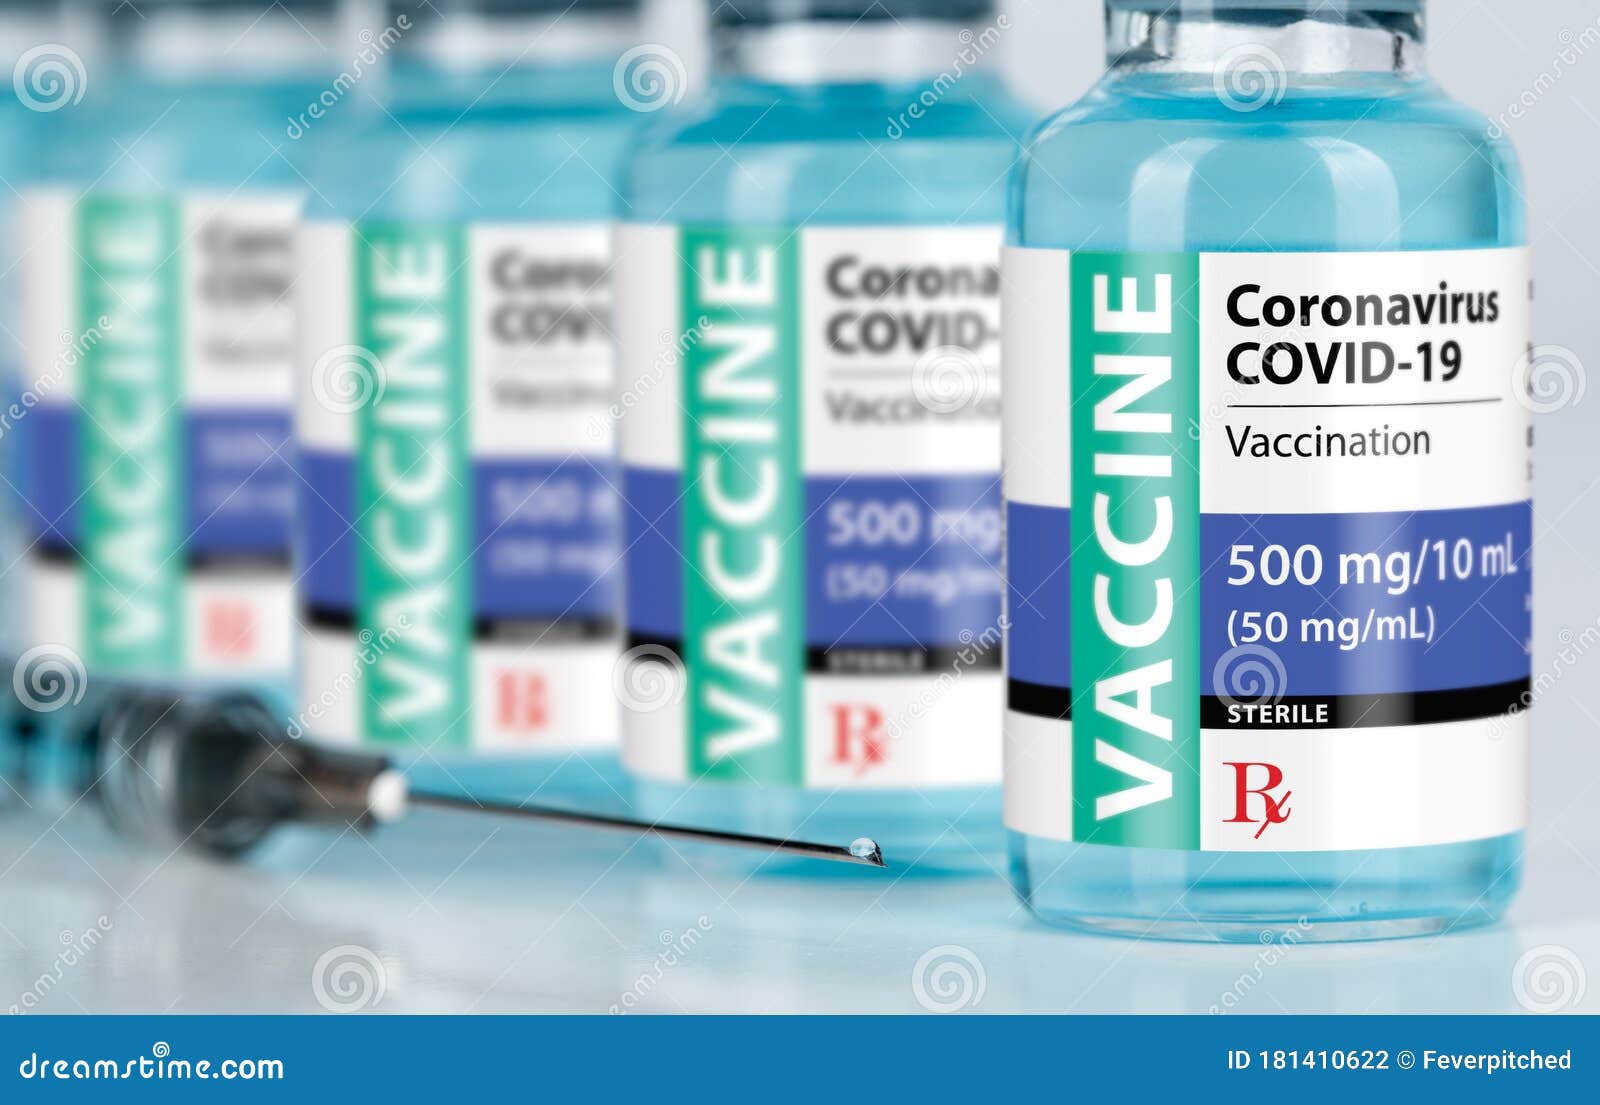 coronavirus covid-19 vaccine vials and syringe on reflective surface